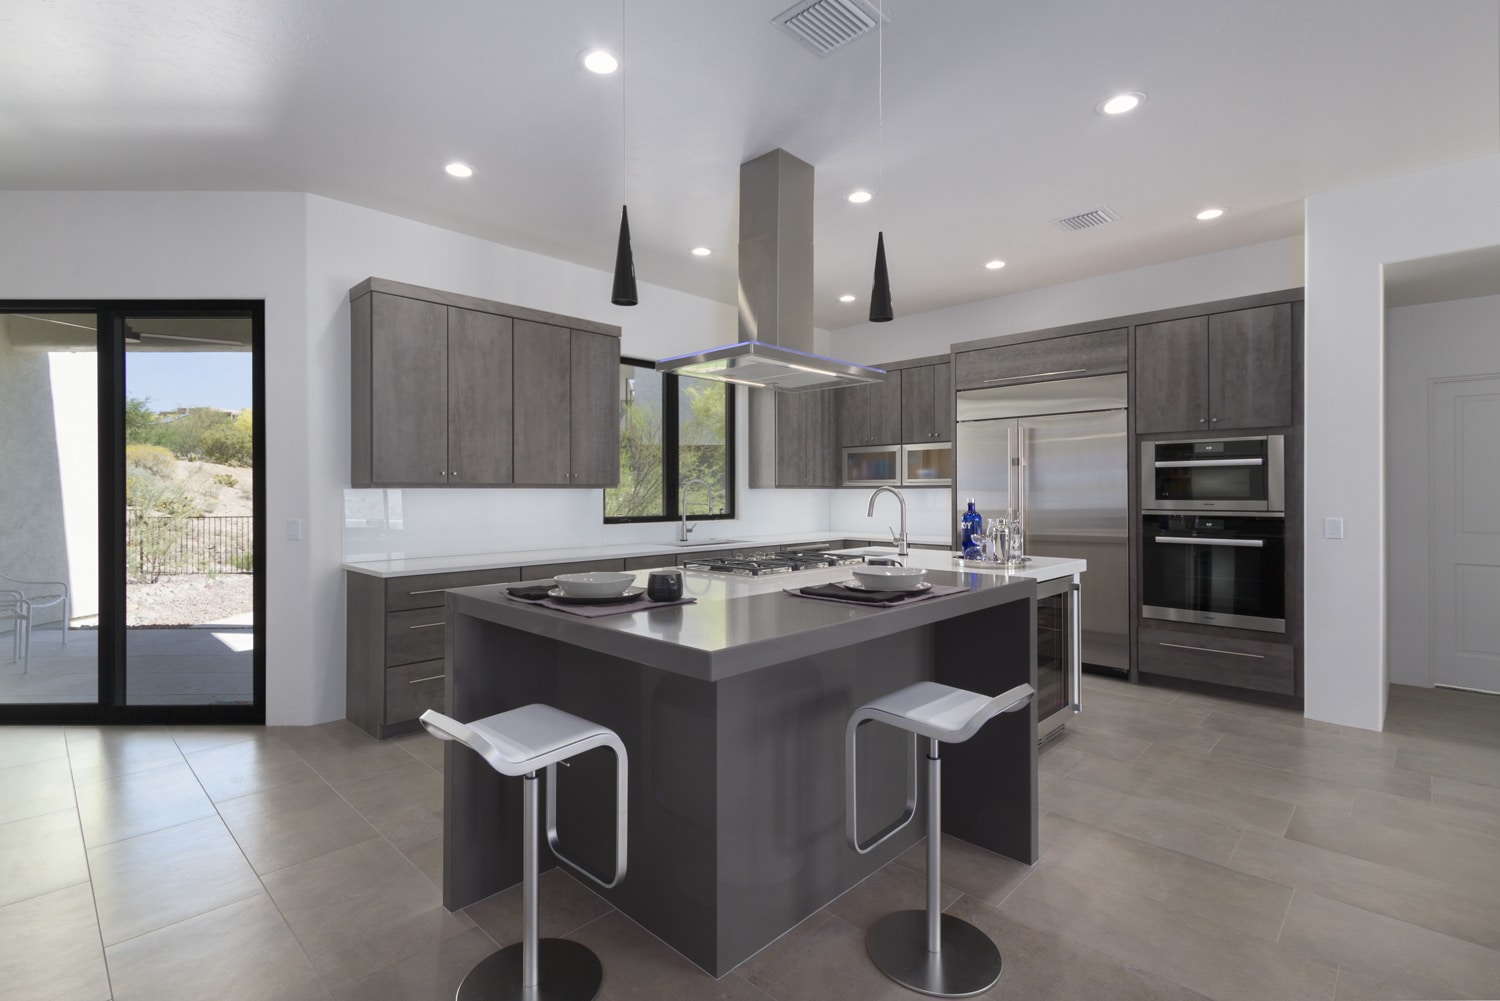 Wood Harbor Dark Grey kitchen Cabinets with white countertop and grey kitchen island